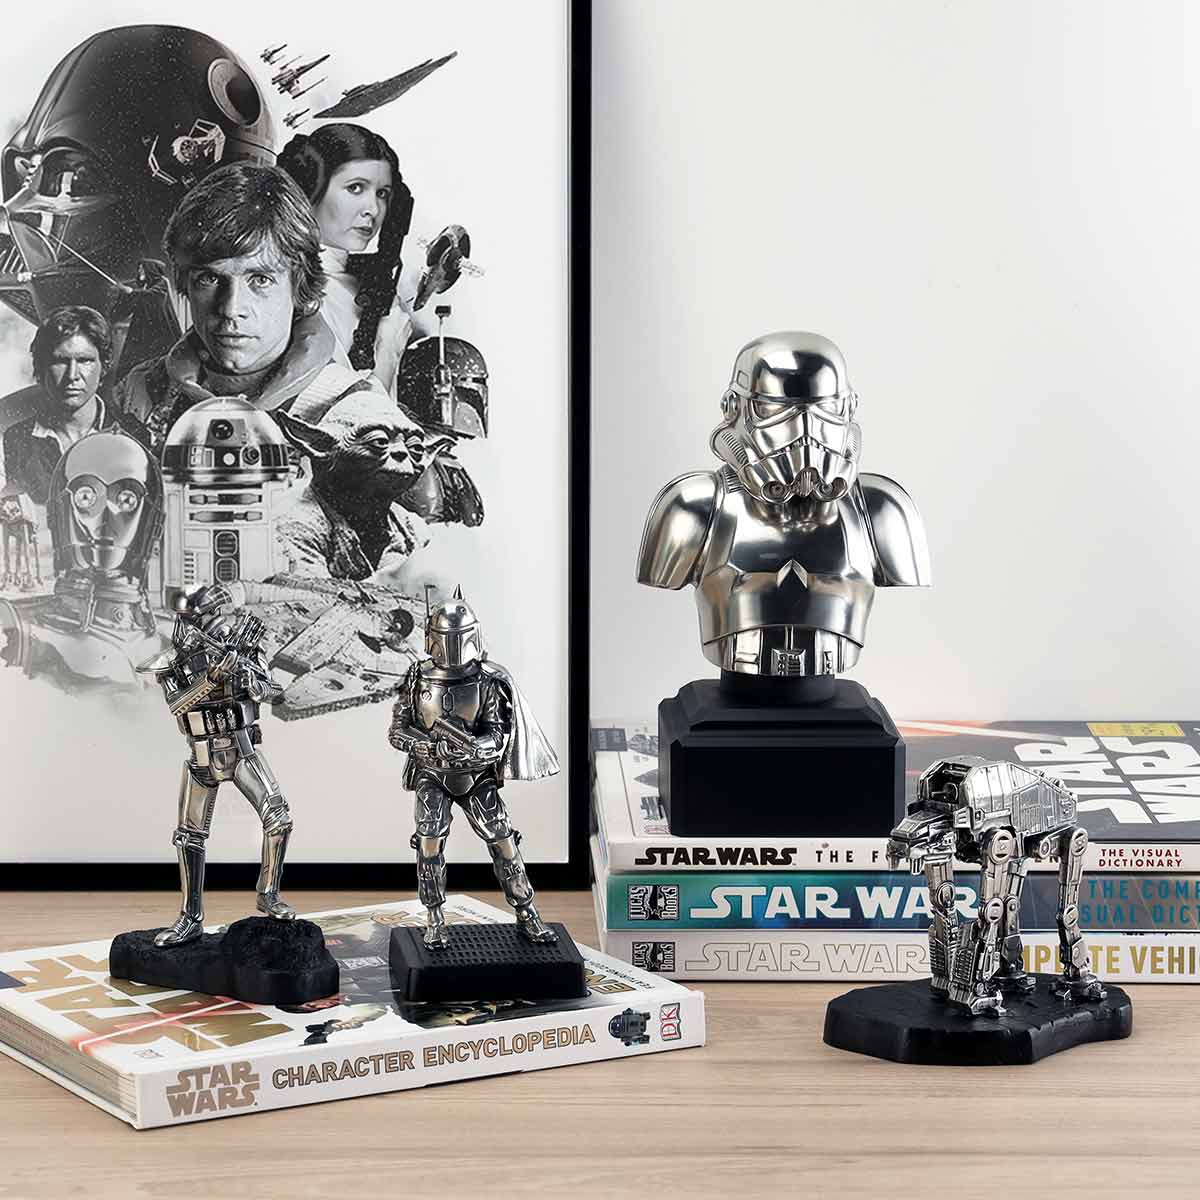 Star Wars AT-M6 Walker Figurine - Collectible Gift